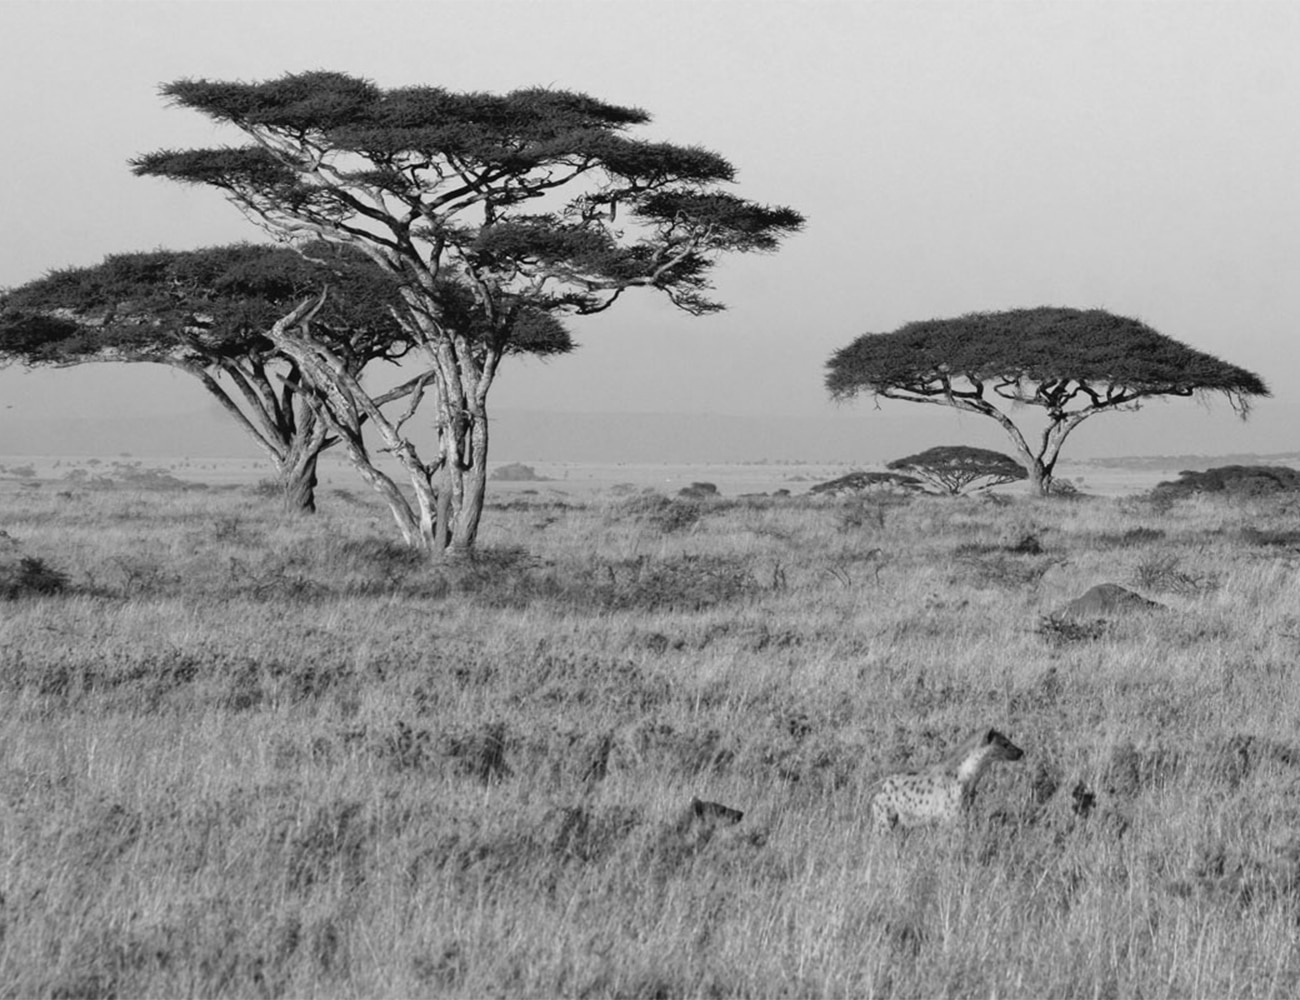 Landscapes of The Serengeti National Park